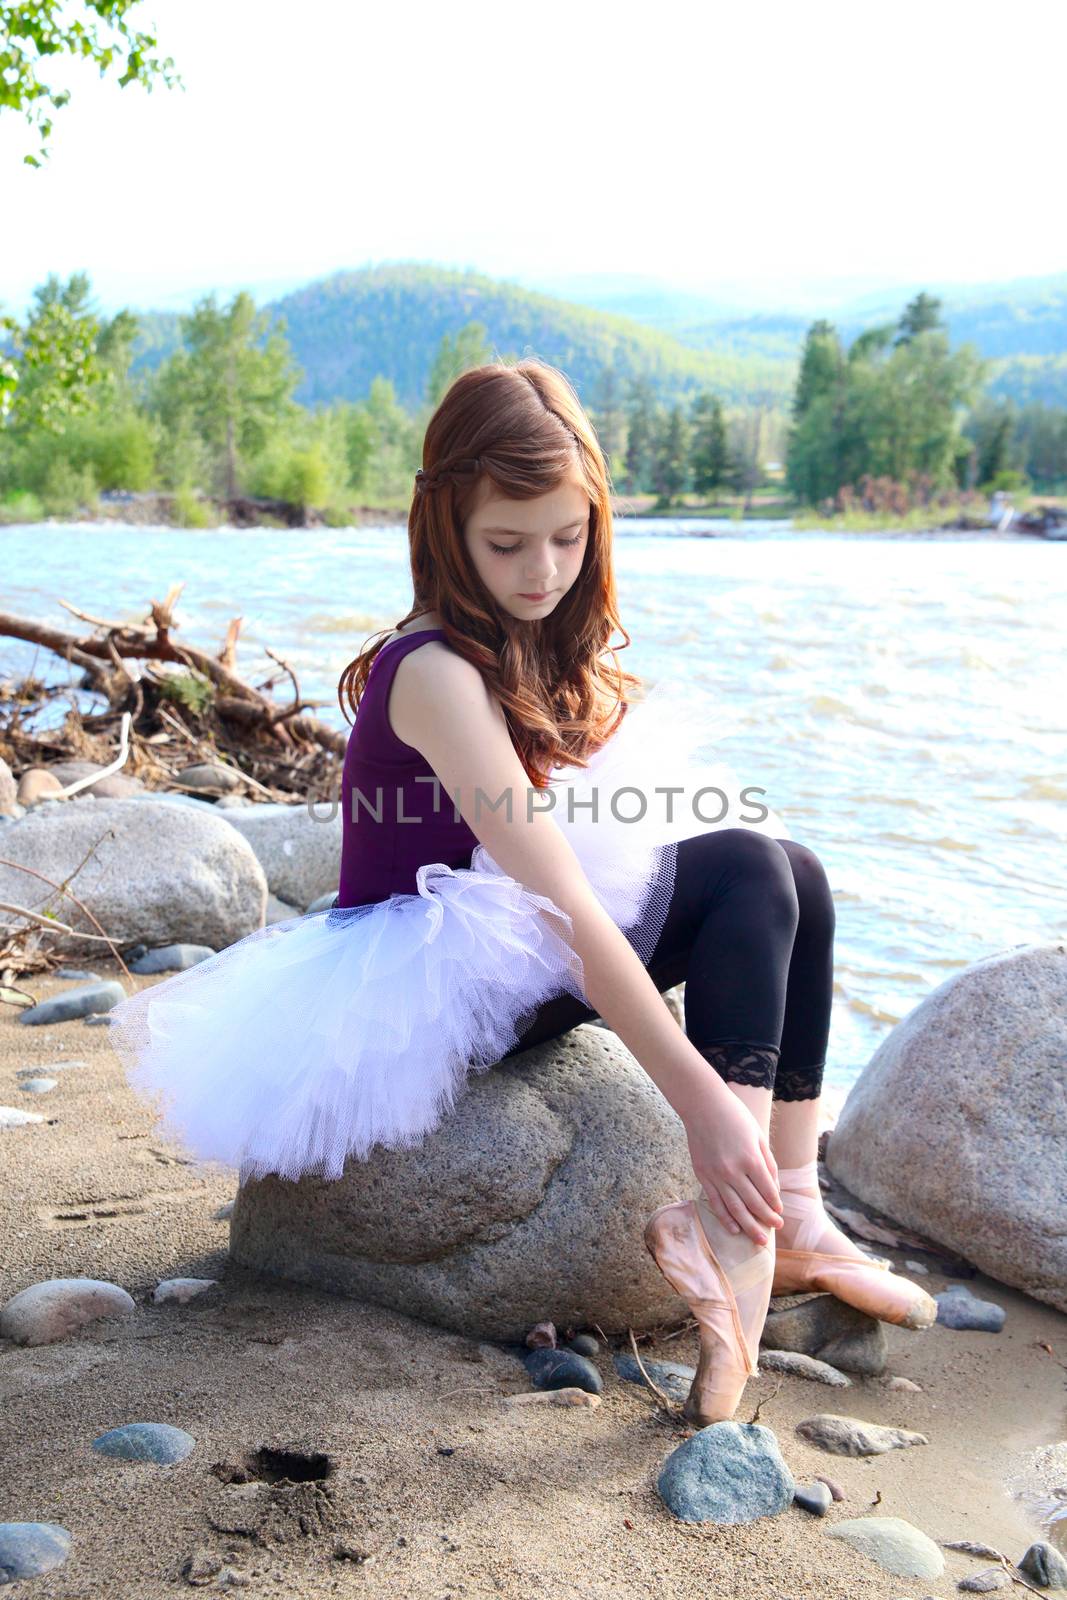 Beautiful girl wearing a white tutu by the river